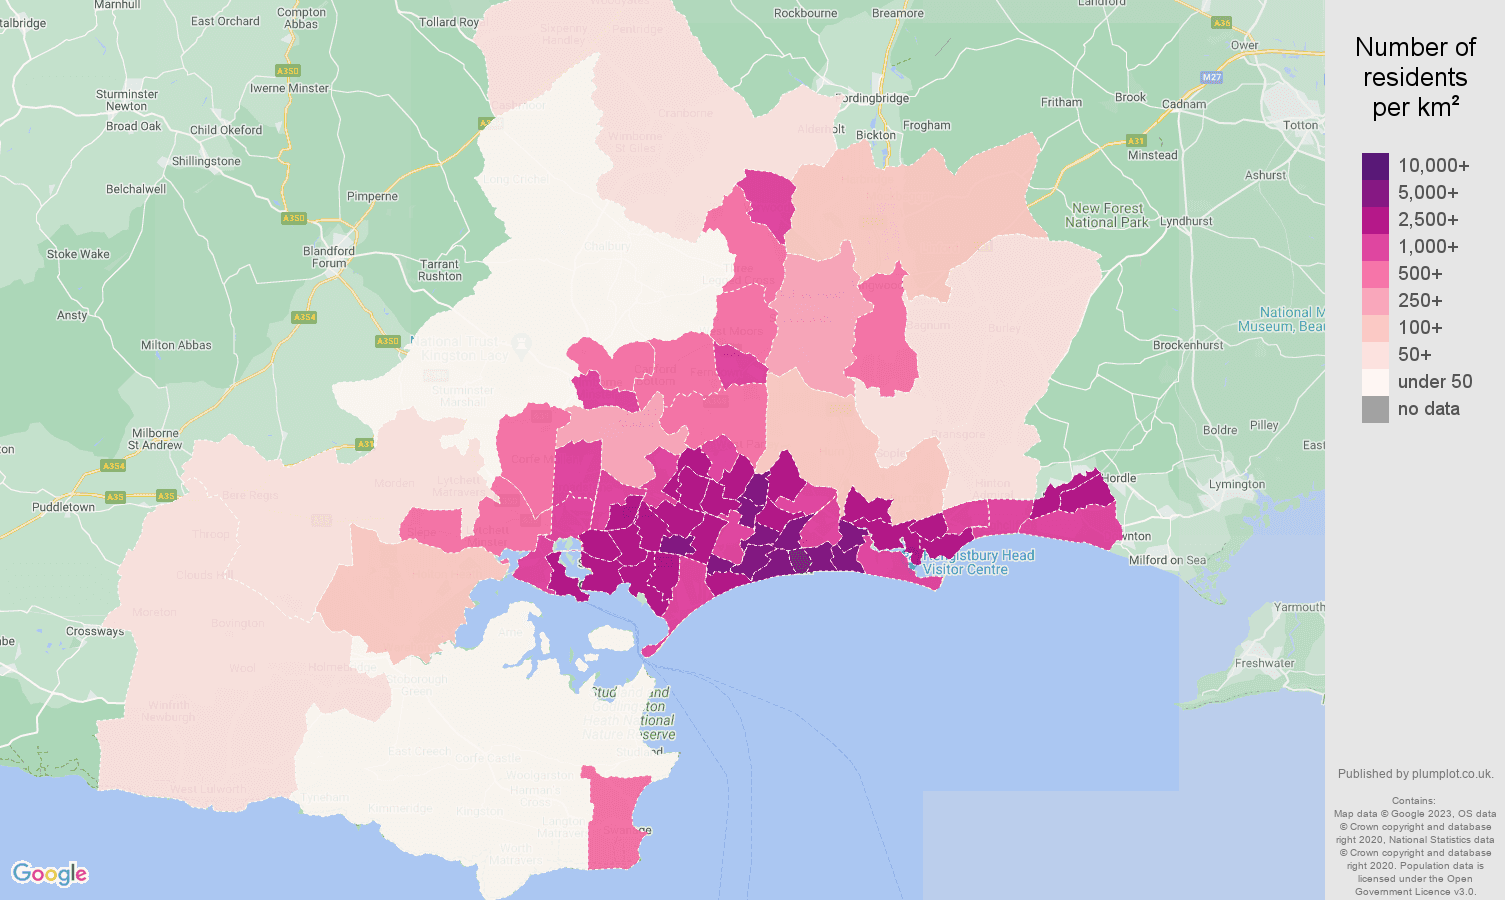 Bournemouth population density map